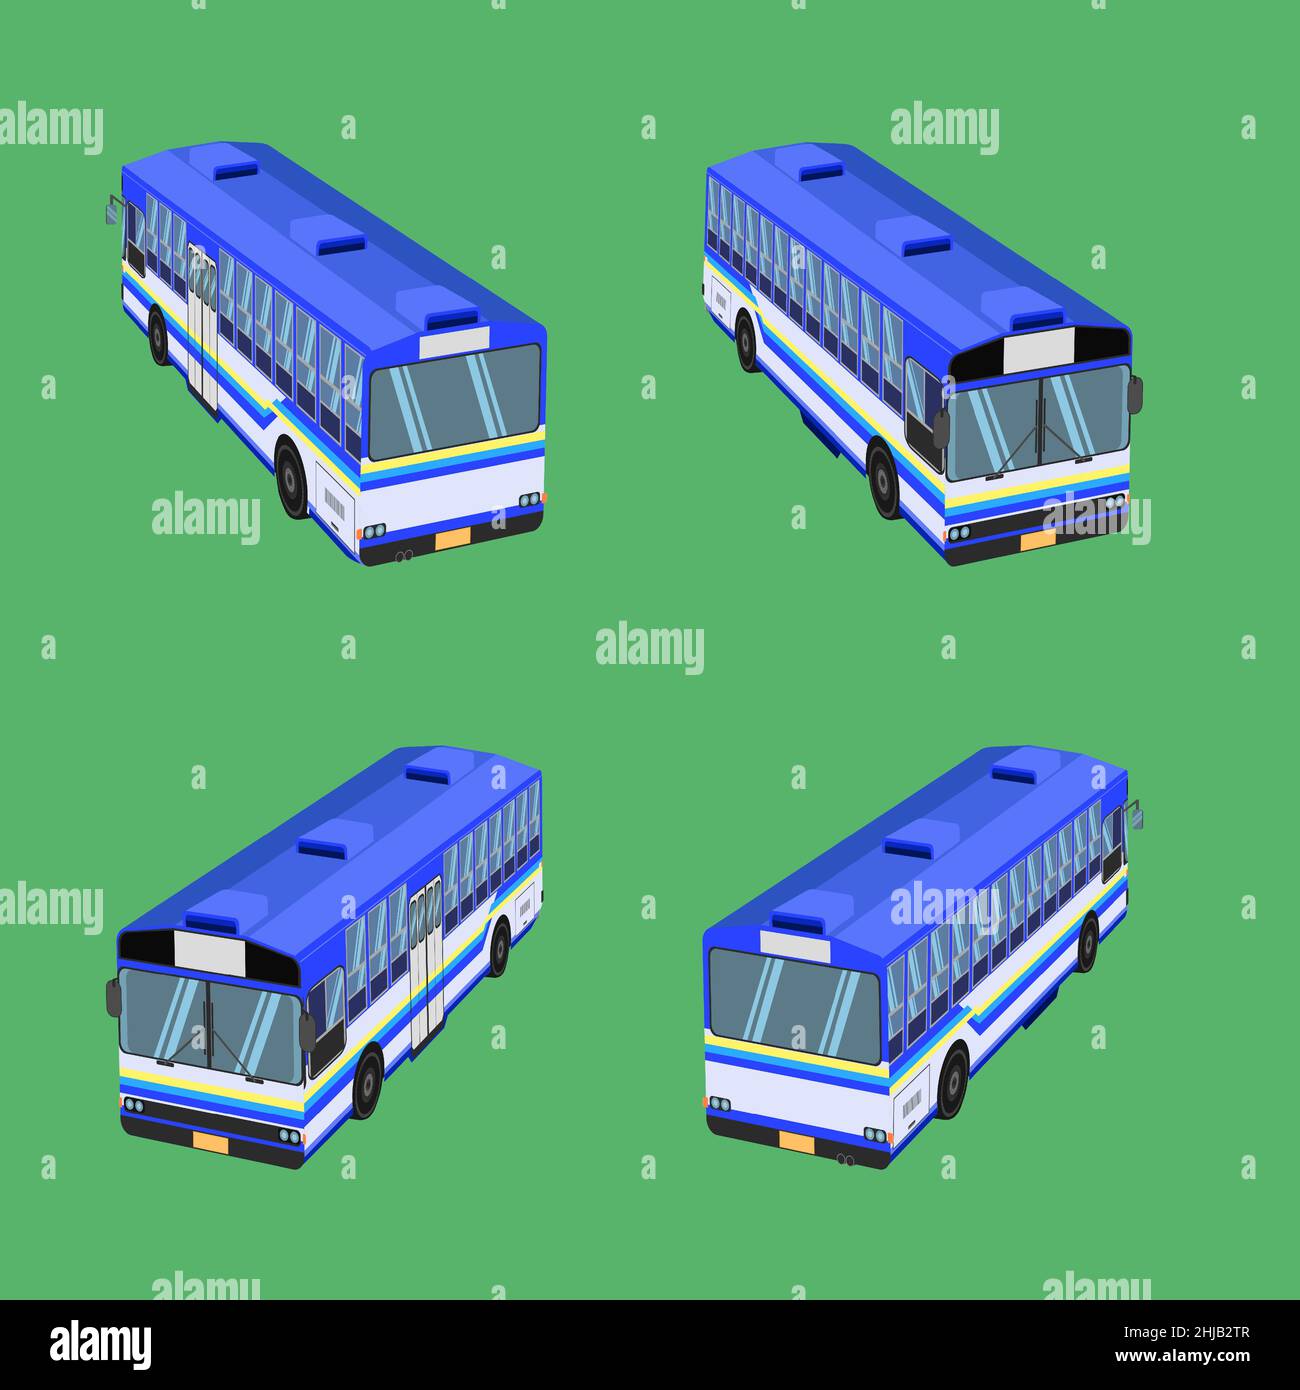 3D Draufsicht thai Bus blau Himmel gelb weiß Transport Auto Fahrzeug Fahrer  Tarif Passagier Autobus Omnibus Bus Schiene Bank Stuhl Stuhl Sessel Sitz  matt Stock-Vektorgrafik - Alamy